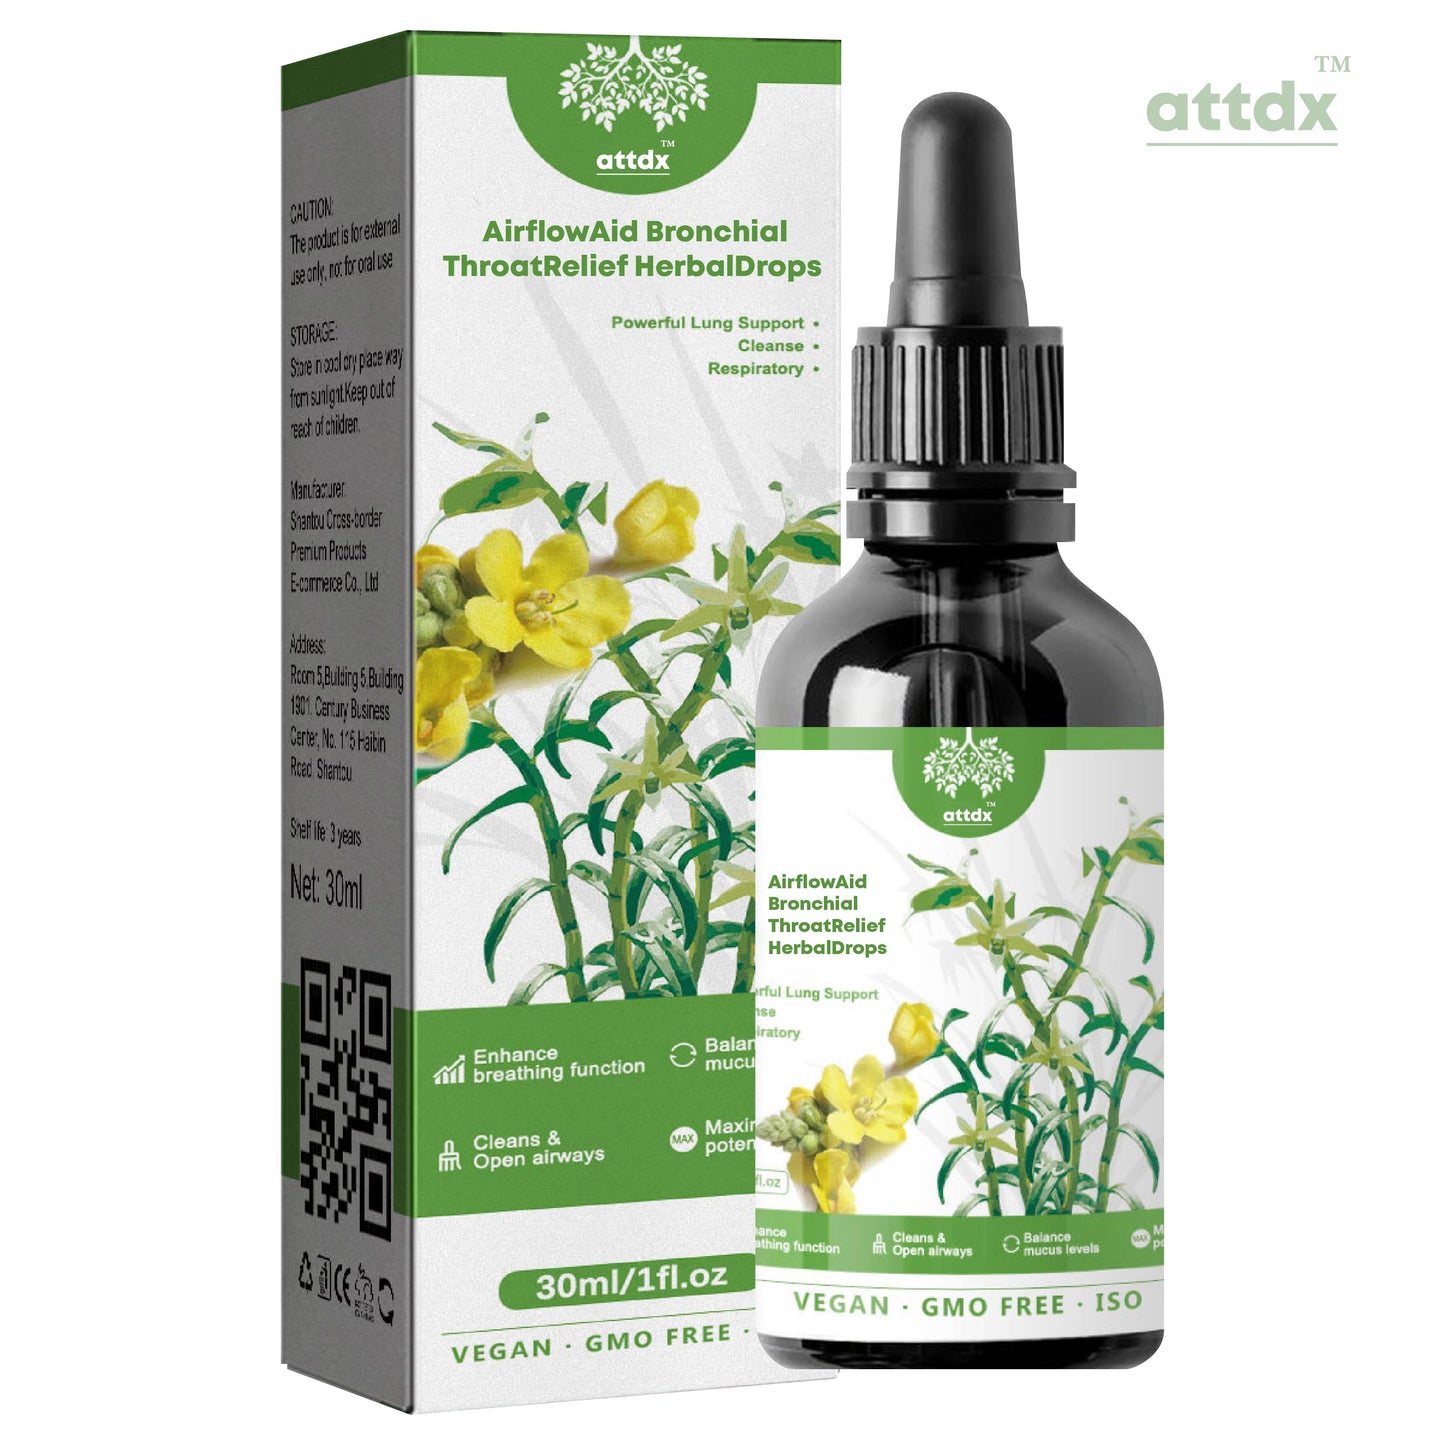 ATTDX AirflowAid Bronchial ThroatRelief HerbalDrops